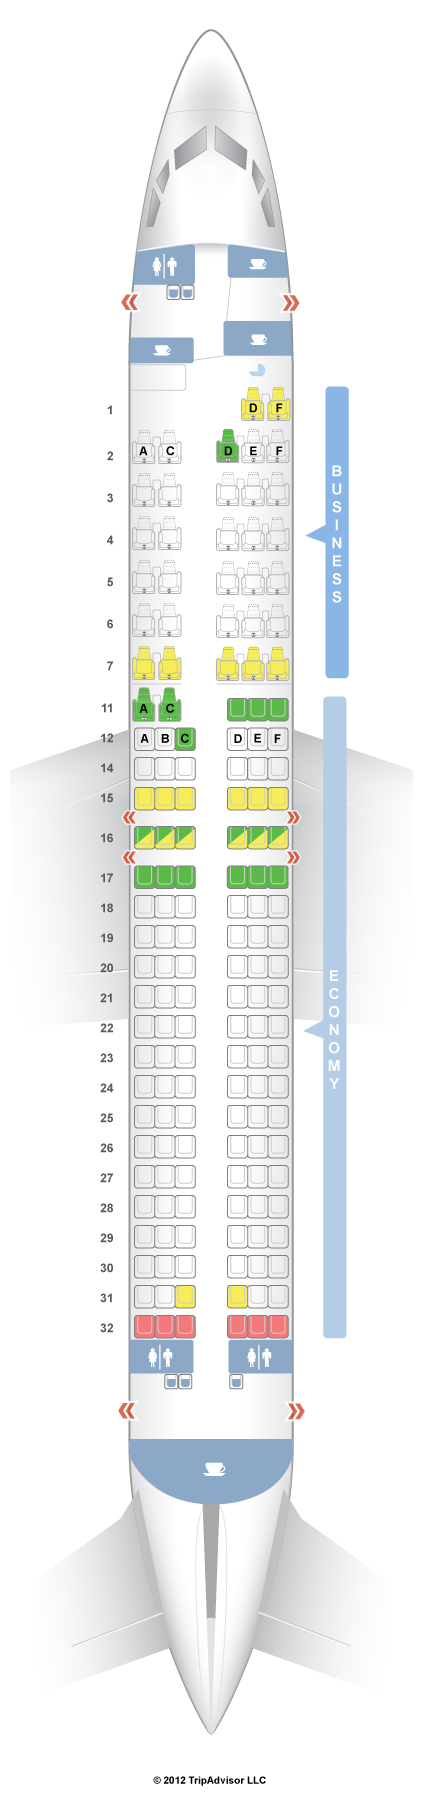 Flysafair Seating Chart